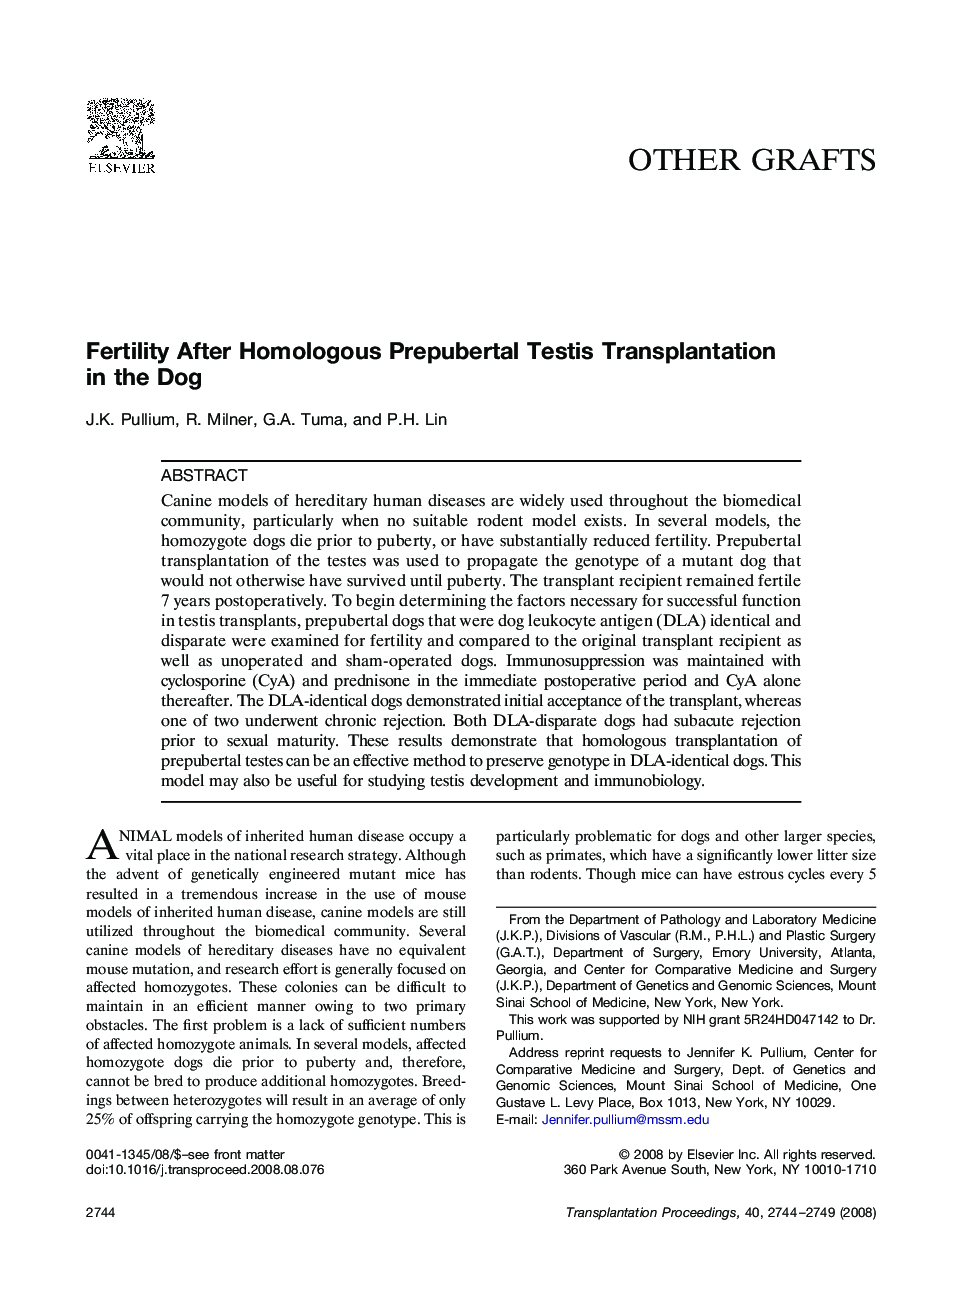 Fertility After Homologous Prepubertal Testis Transplantation in the Dog 